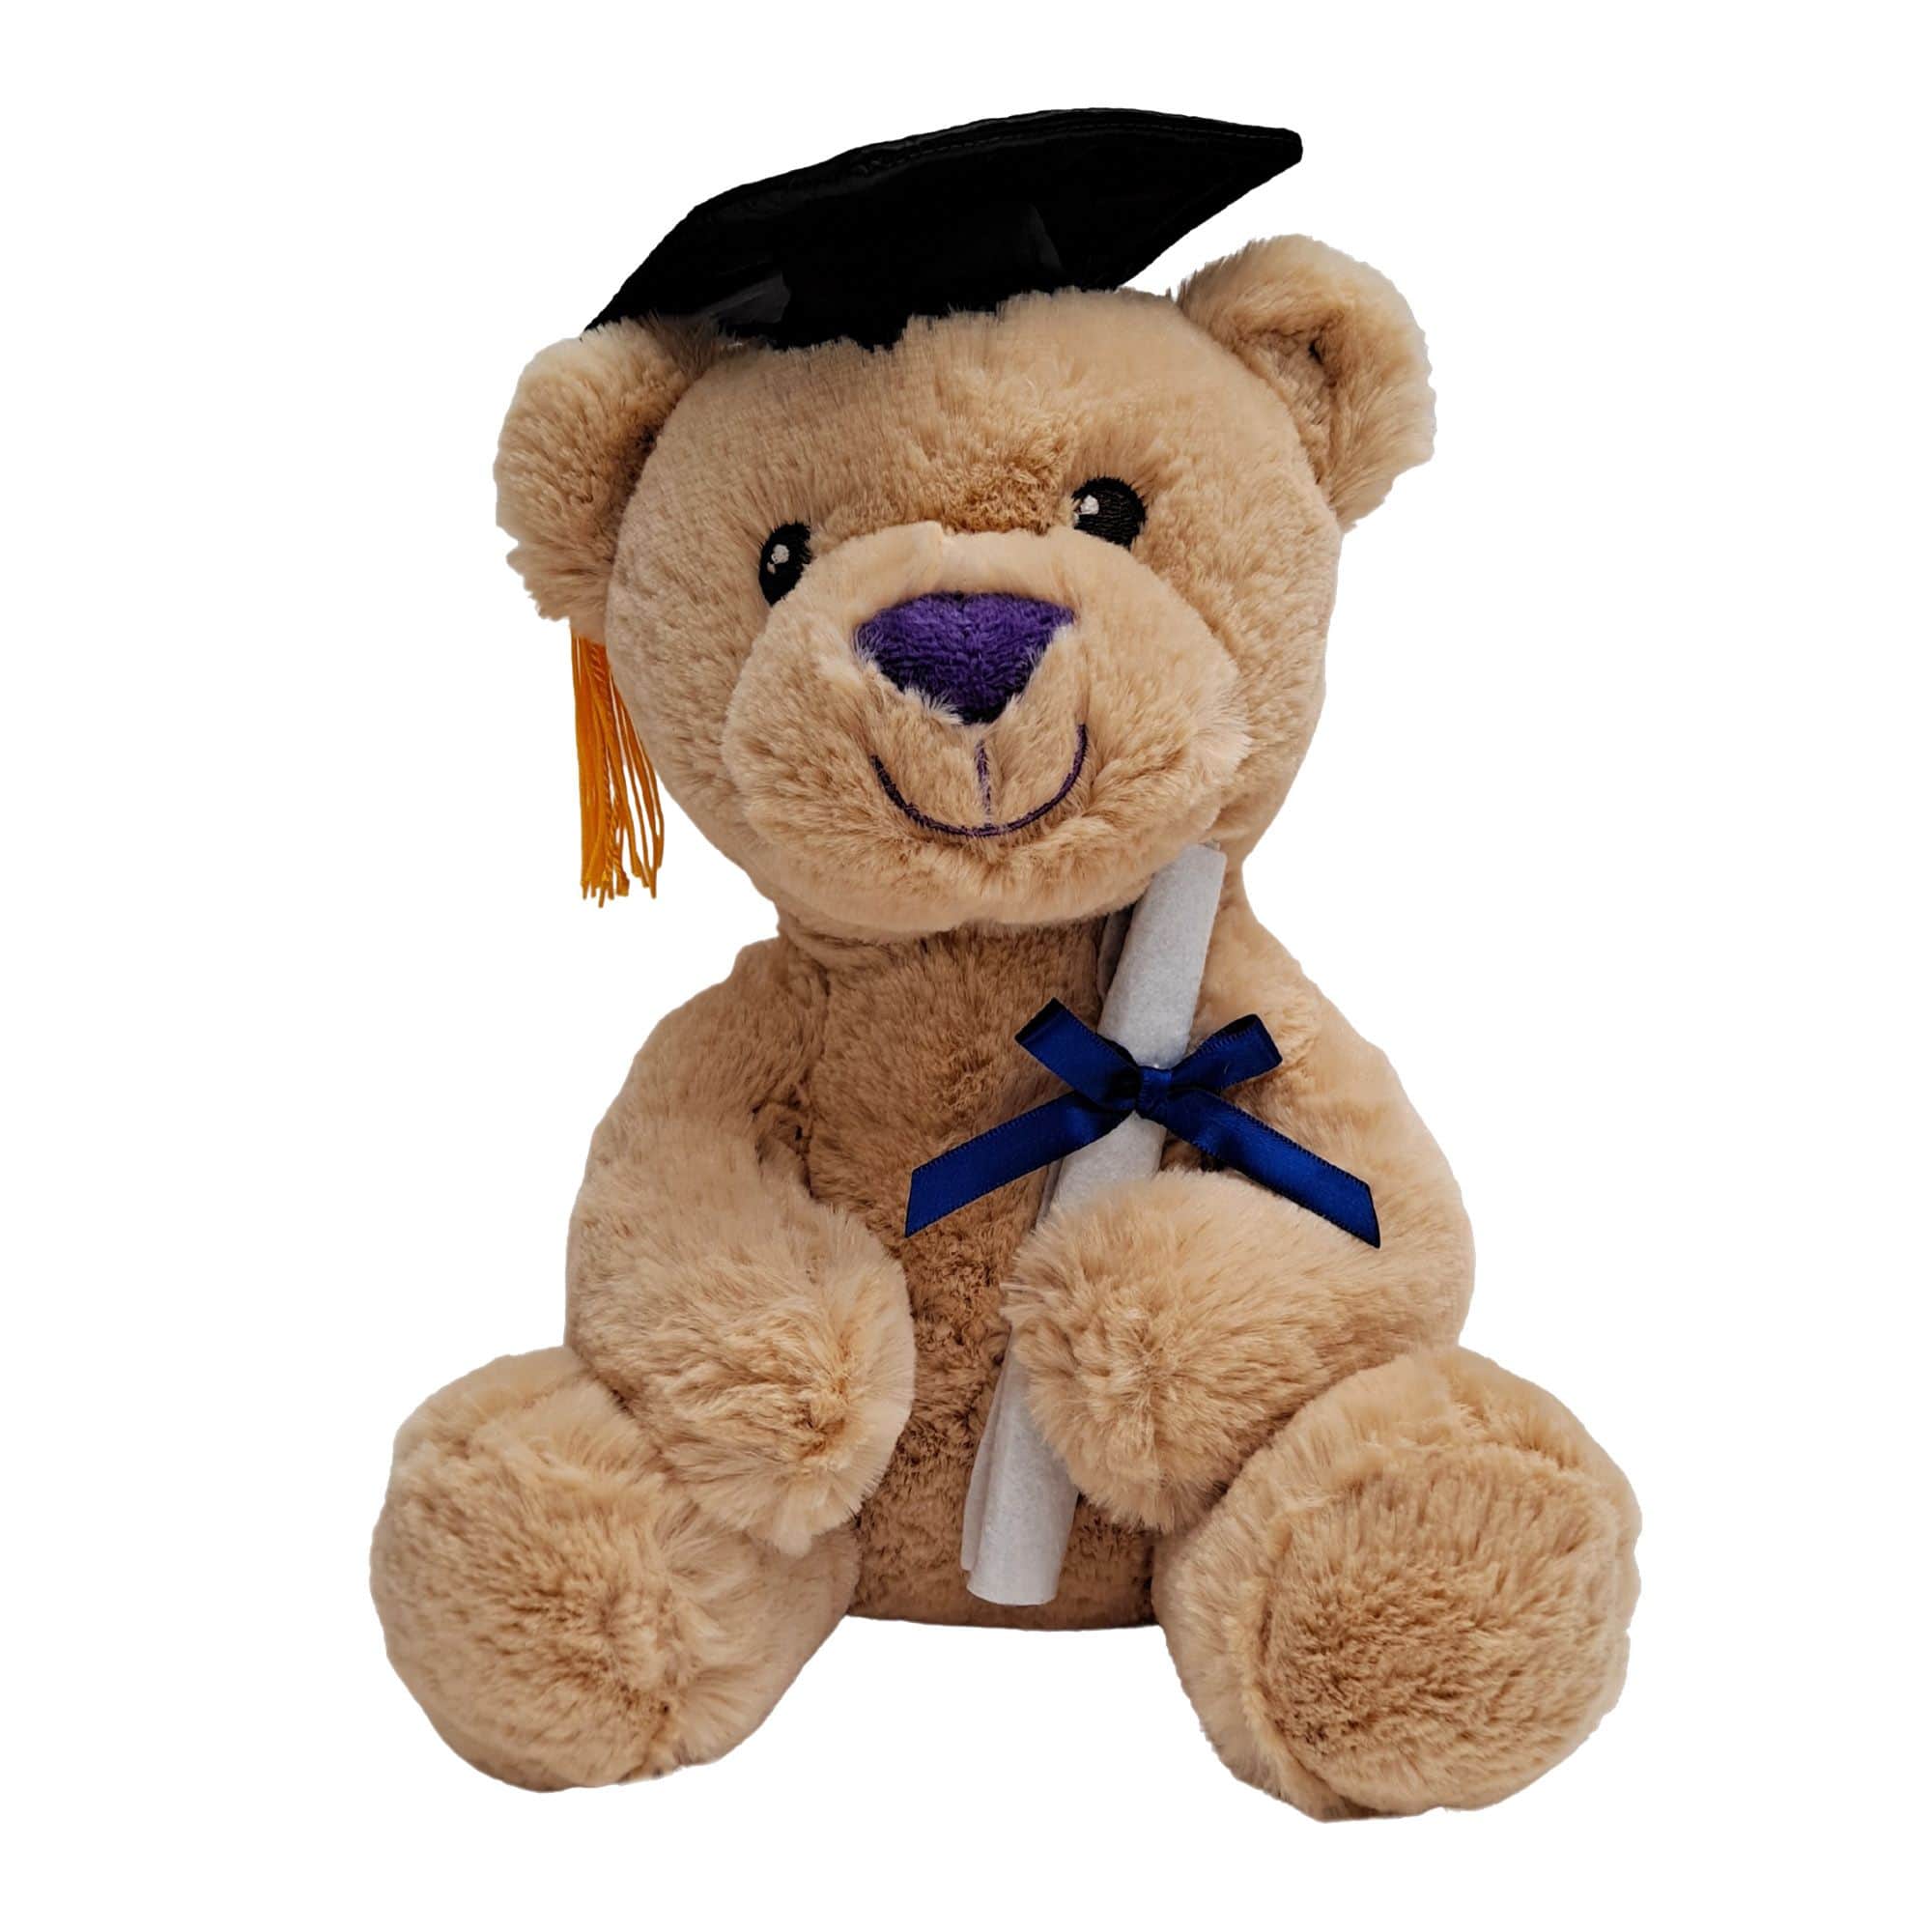 Plush Soft Fabric Graduation Bear with Graduation Cap & Diploma